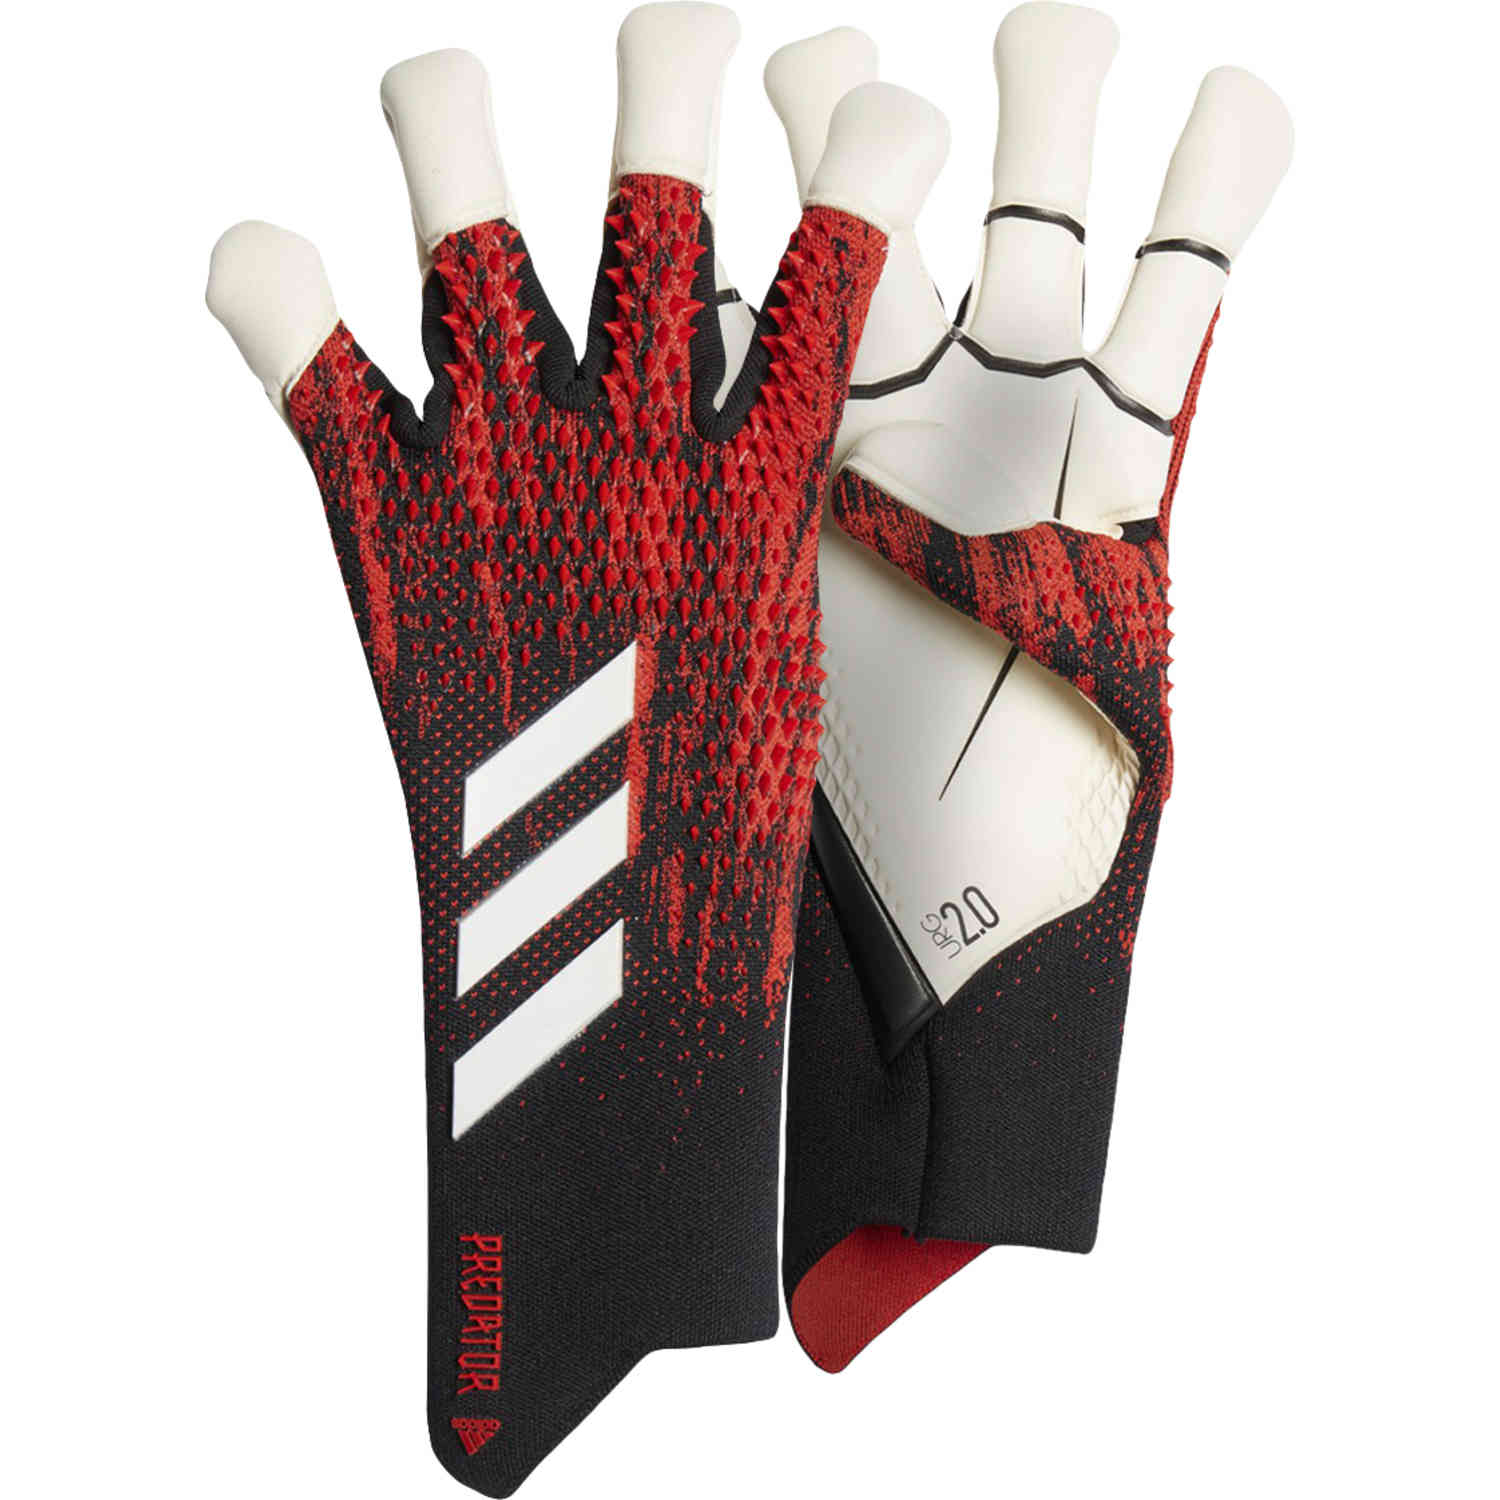 adidas Predator Pro Hybrid Cut Goalkeeper Gloves - Mutator Pack - SoccerPro